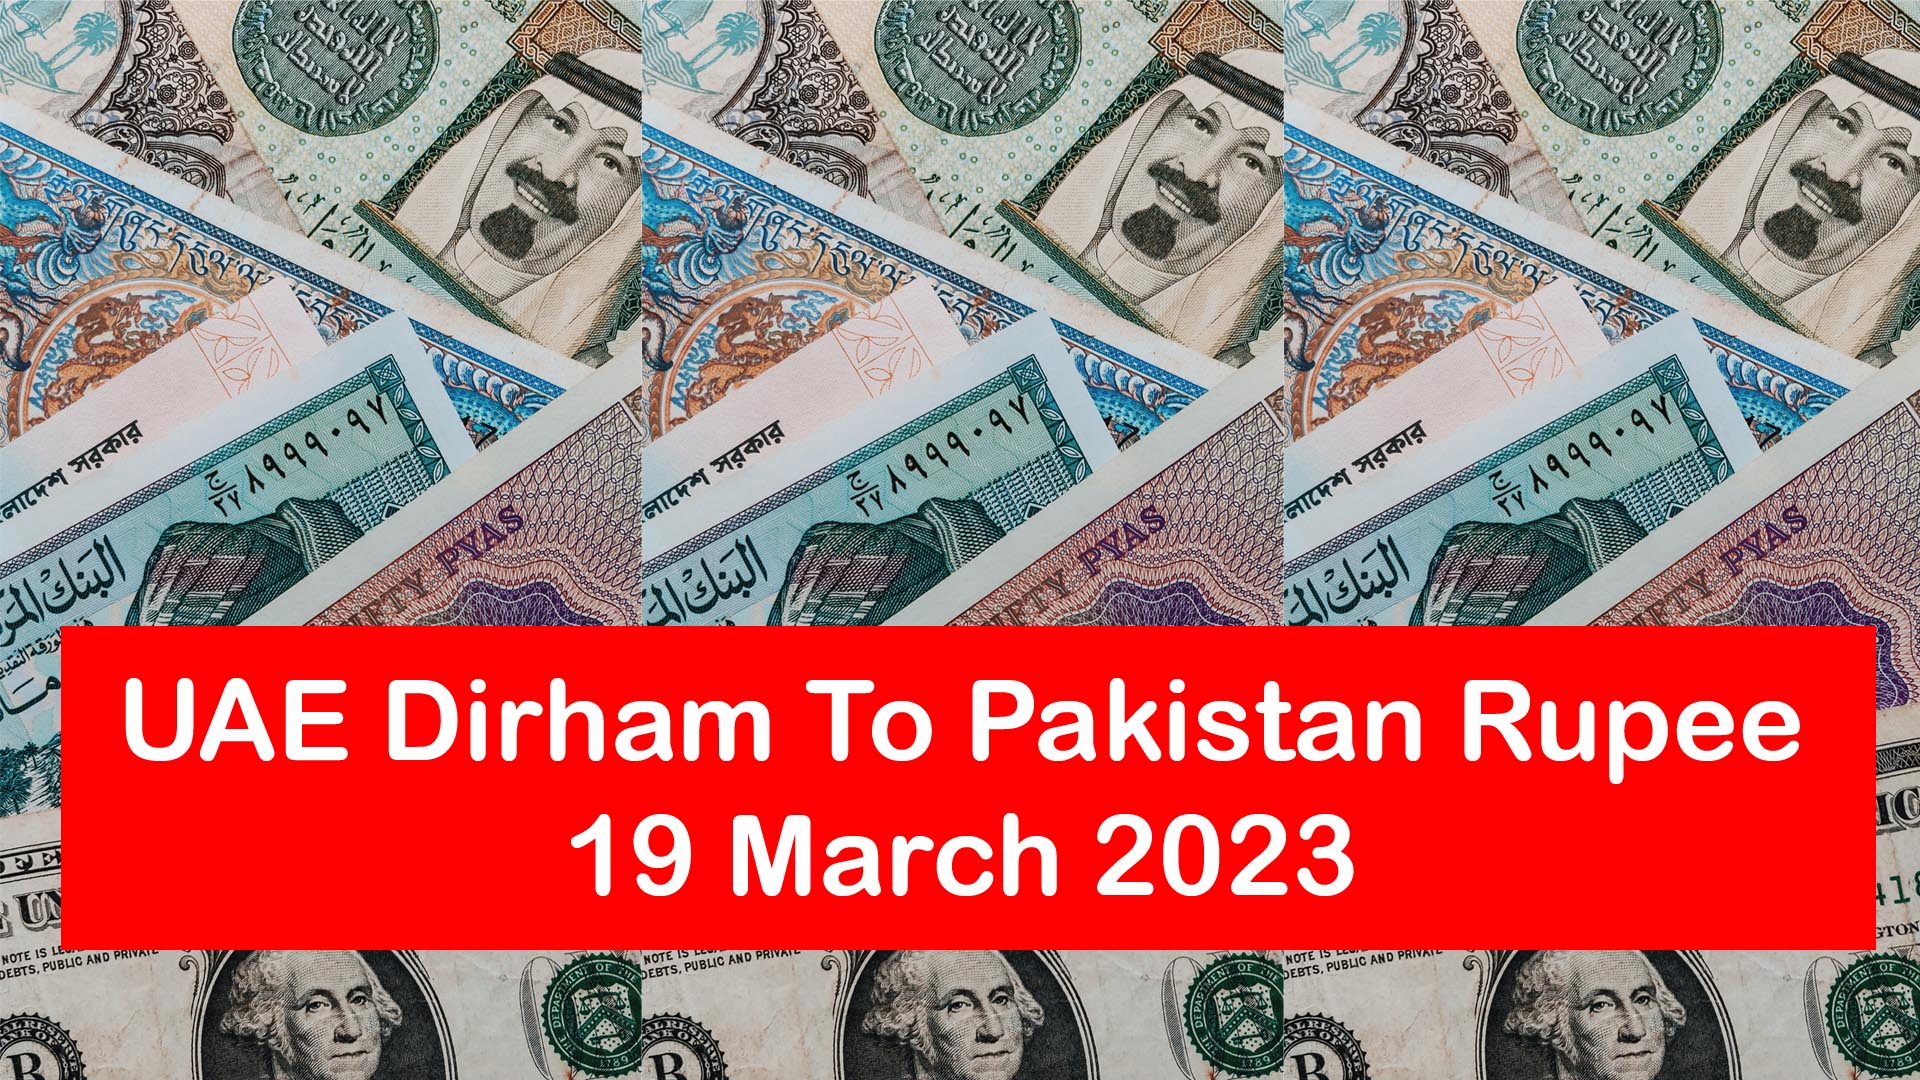 UAE Dirham To Pakistan Rupee – 19 March 2023